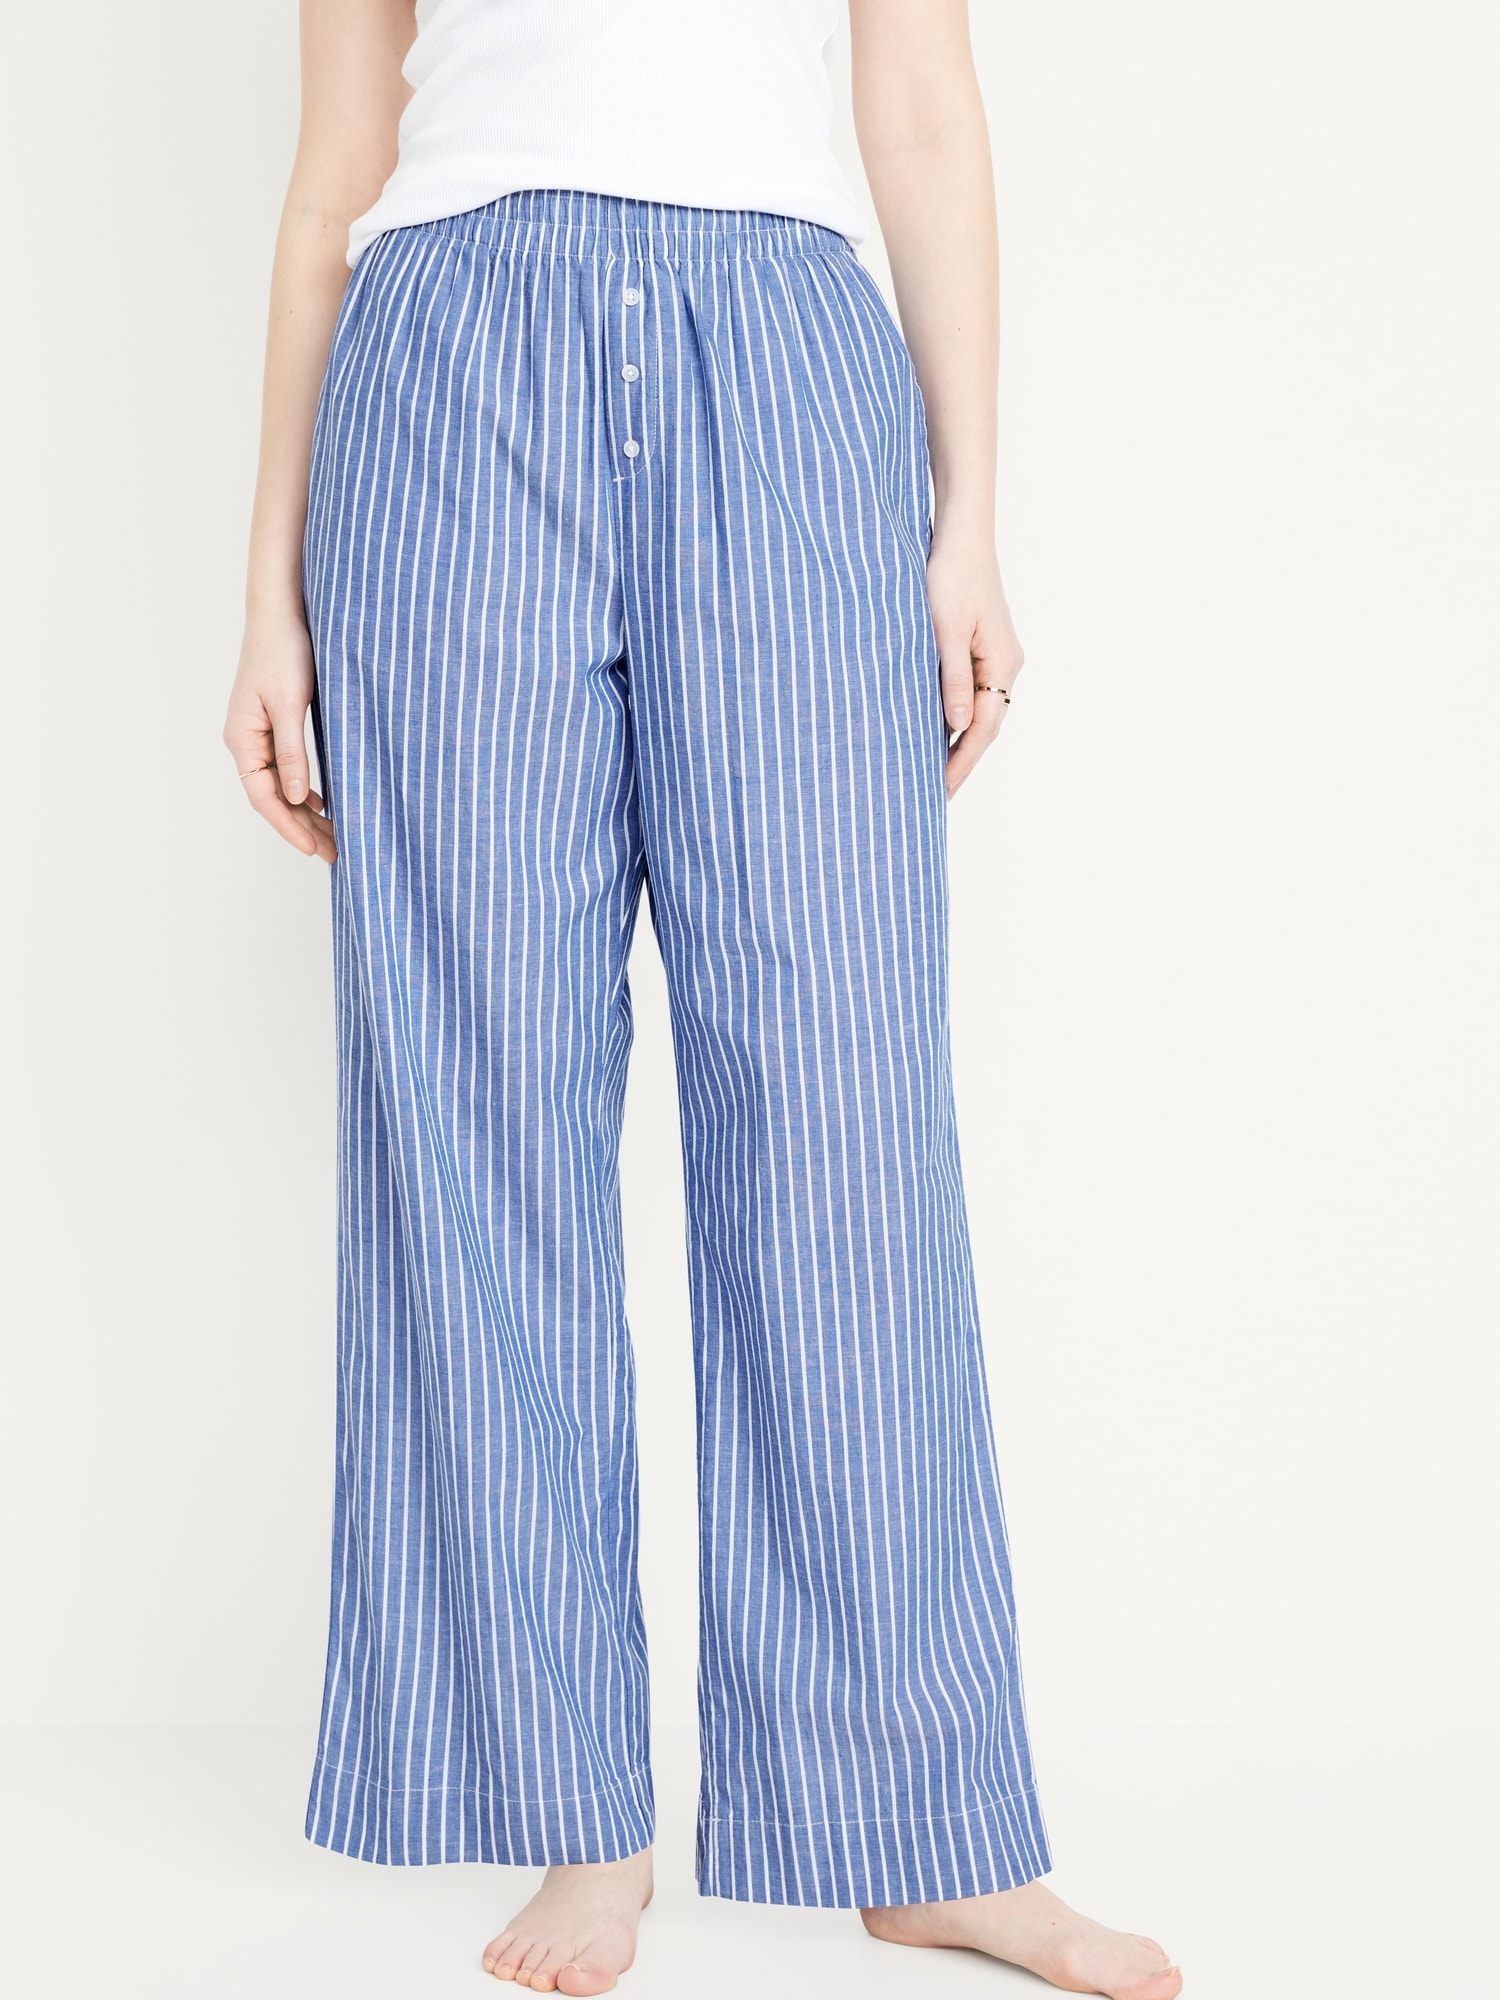 Shop Jersey Pajama Pants - Navy Blue Online